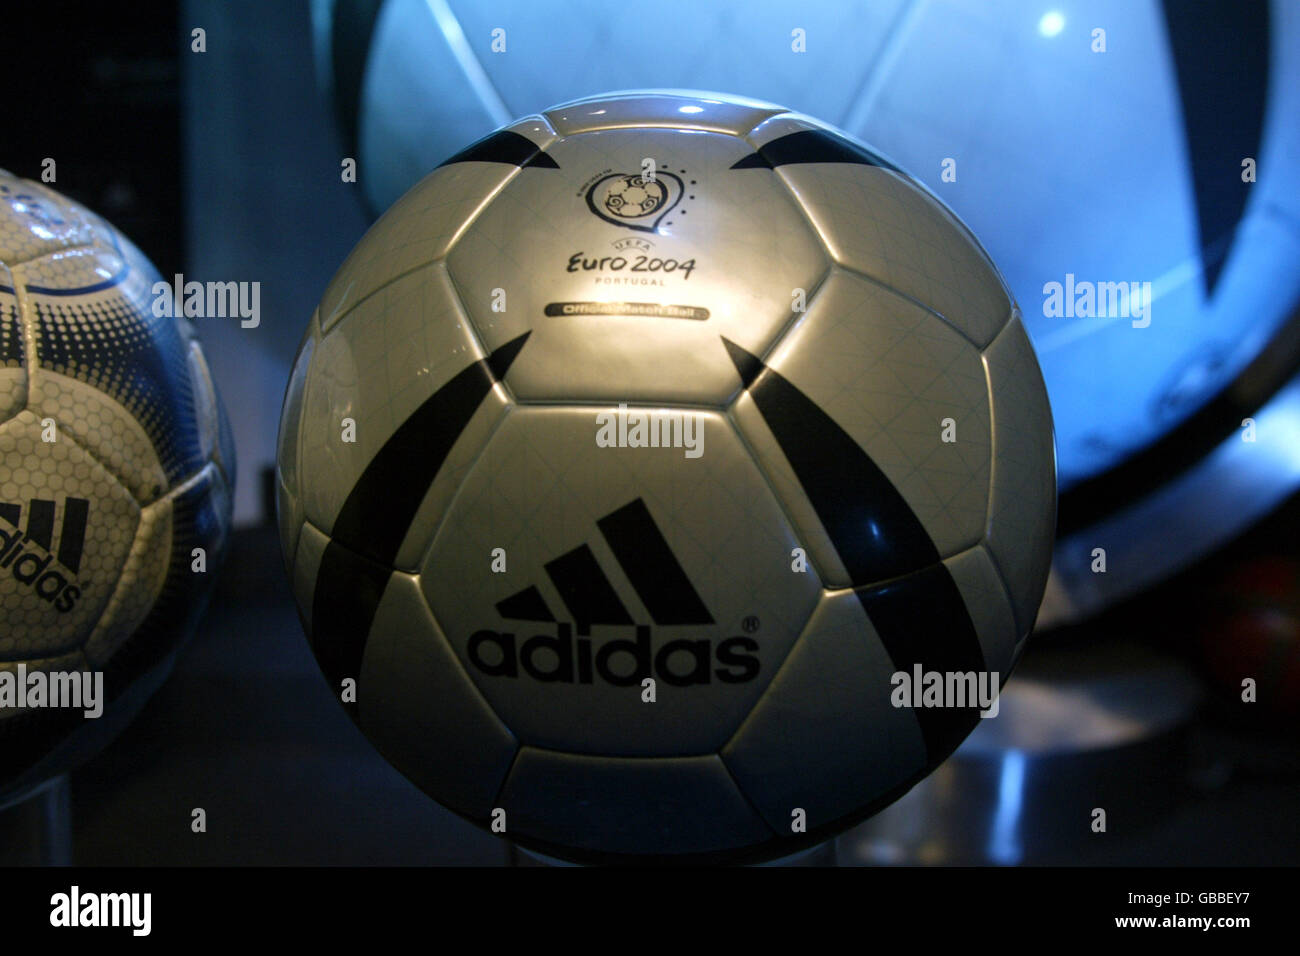 Lancement officiel de football - UEFA Euro 2004 Match Ball - Adidas Roteiro  Photo Stock - Alamy